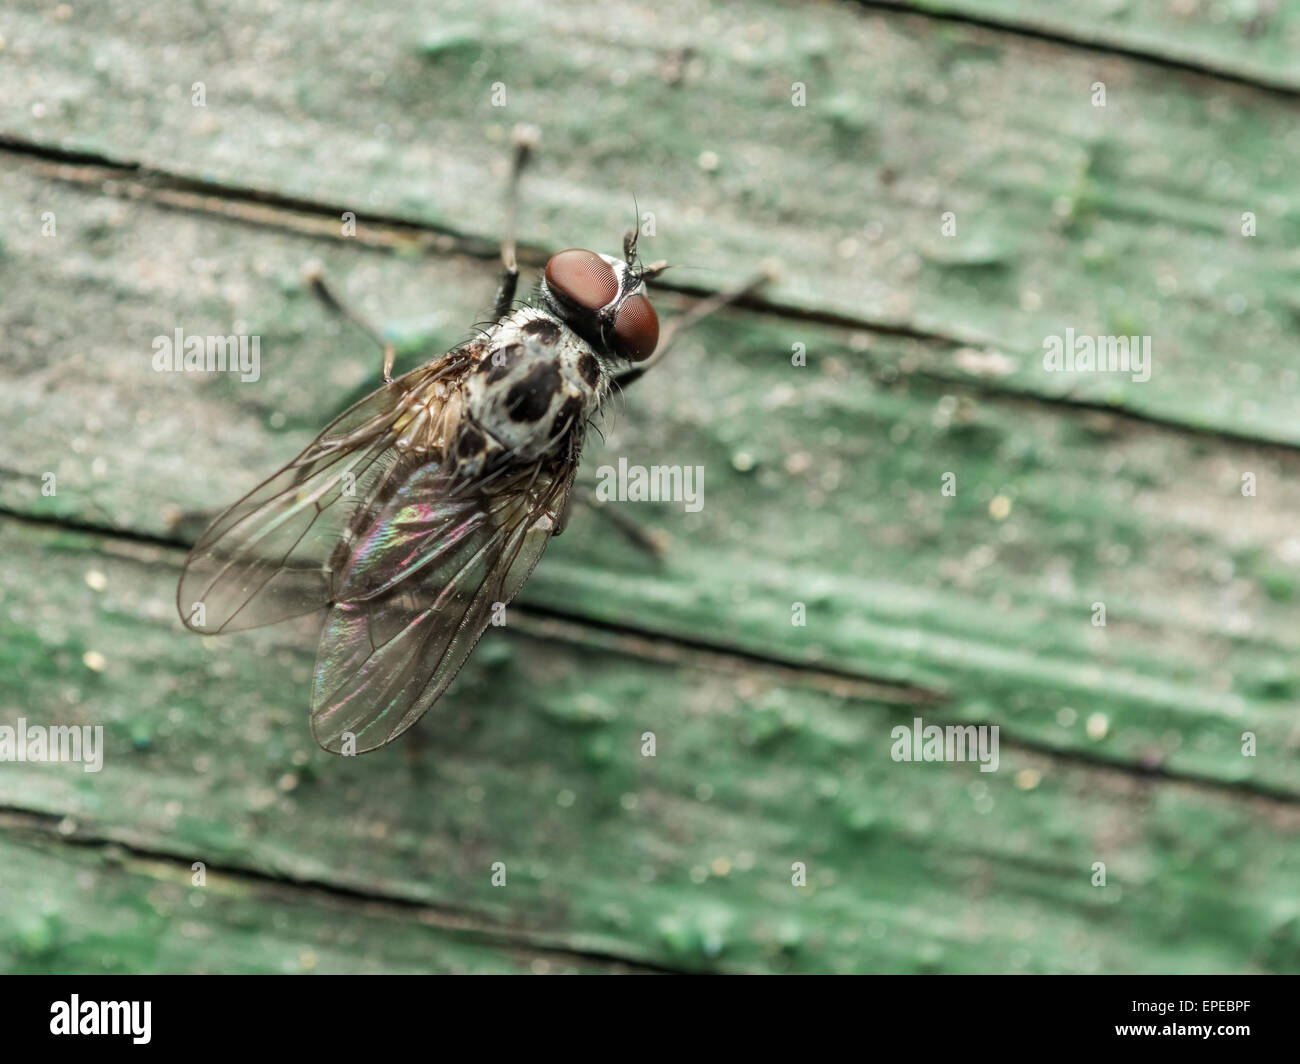 Housefly Macro On Green Wood Background Stock Photo